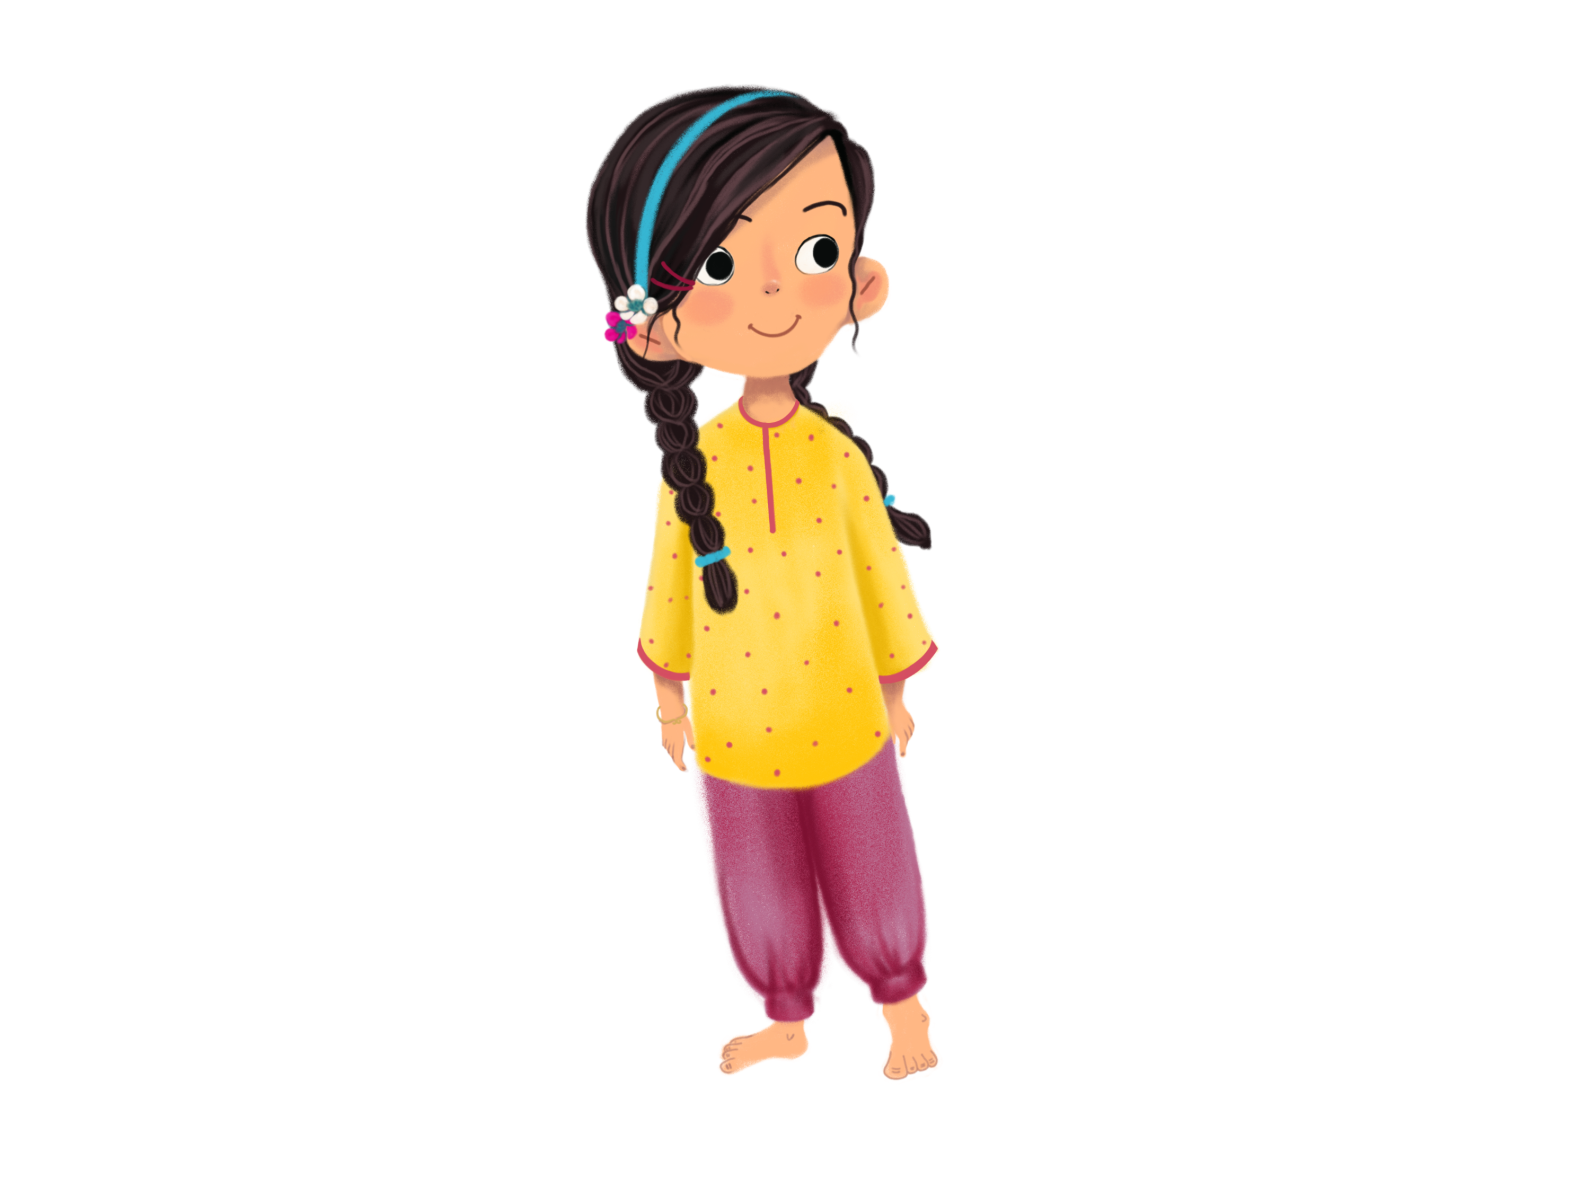 Punjabi girl by Neha gupta on Dribbble